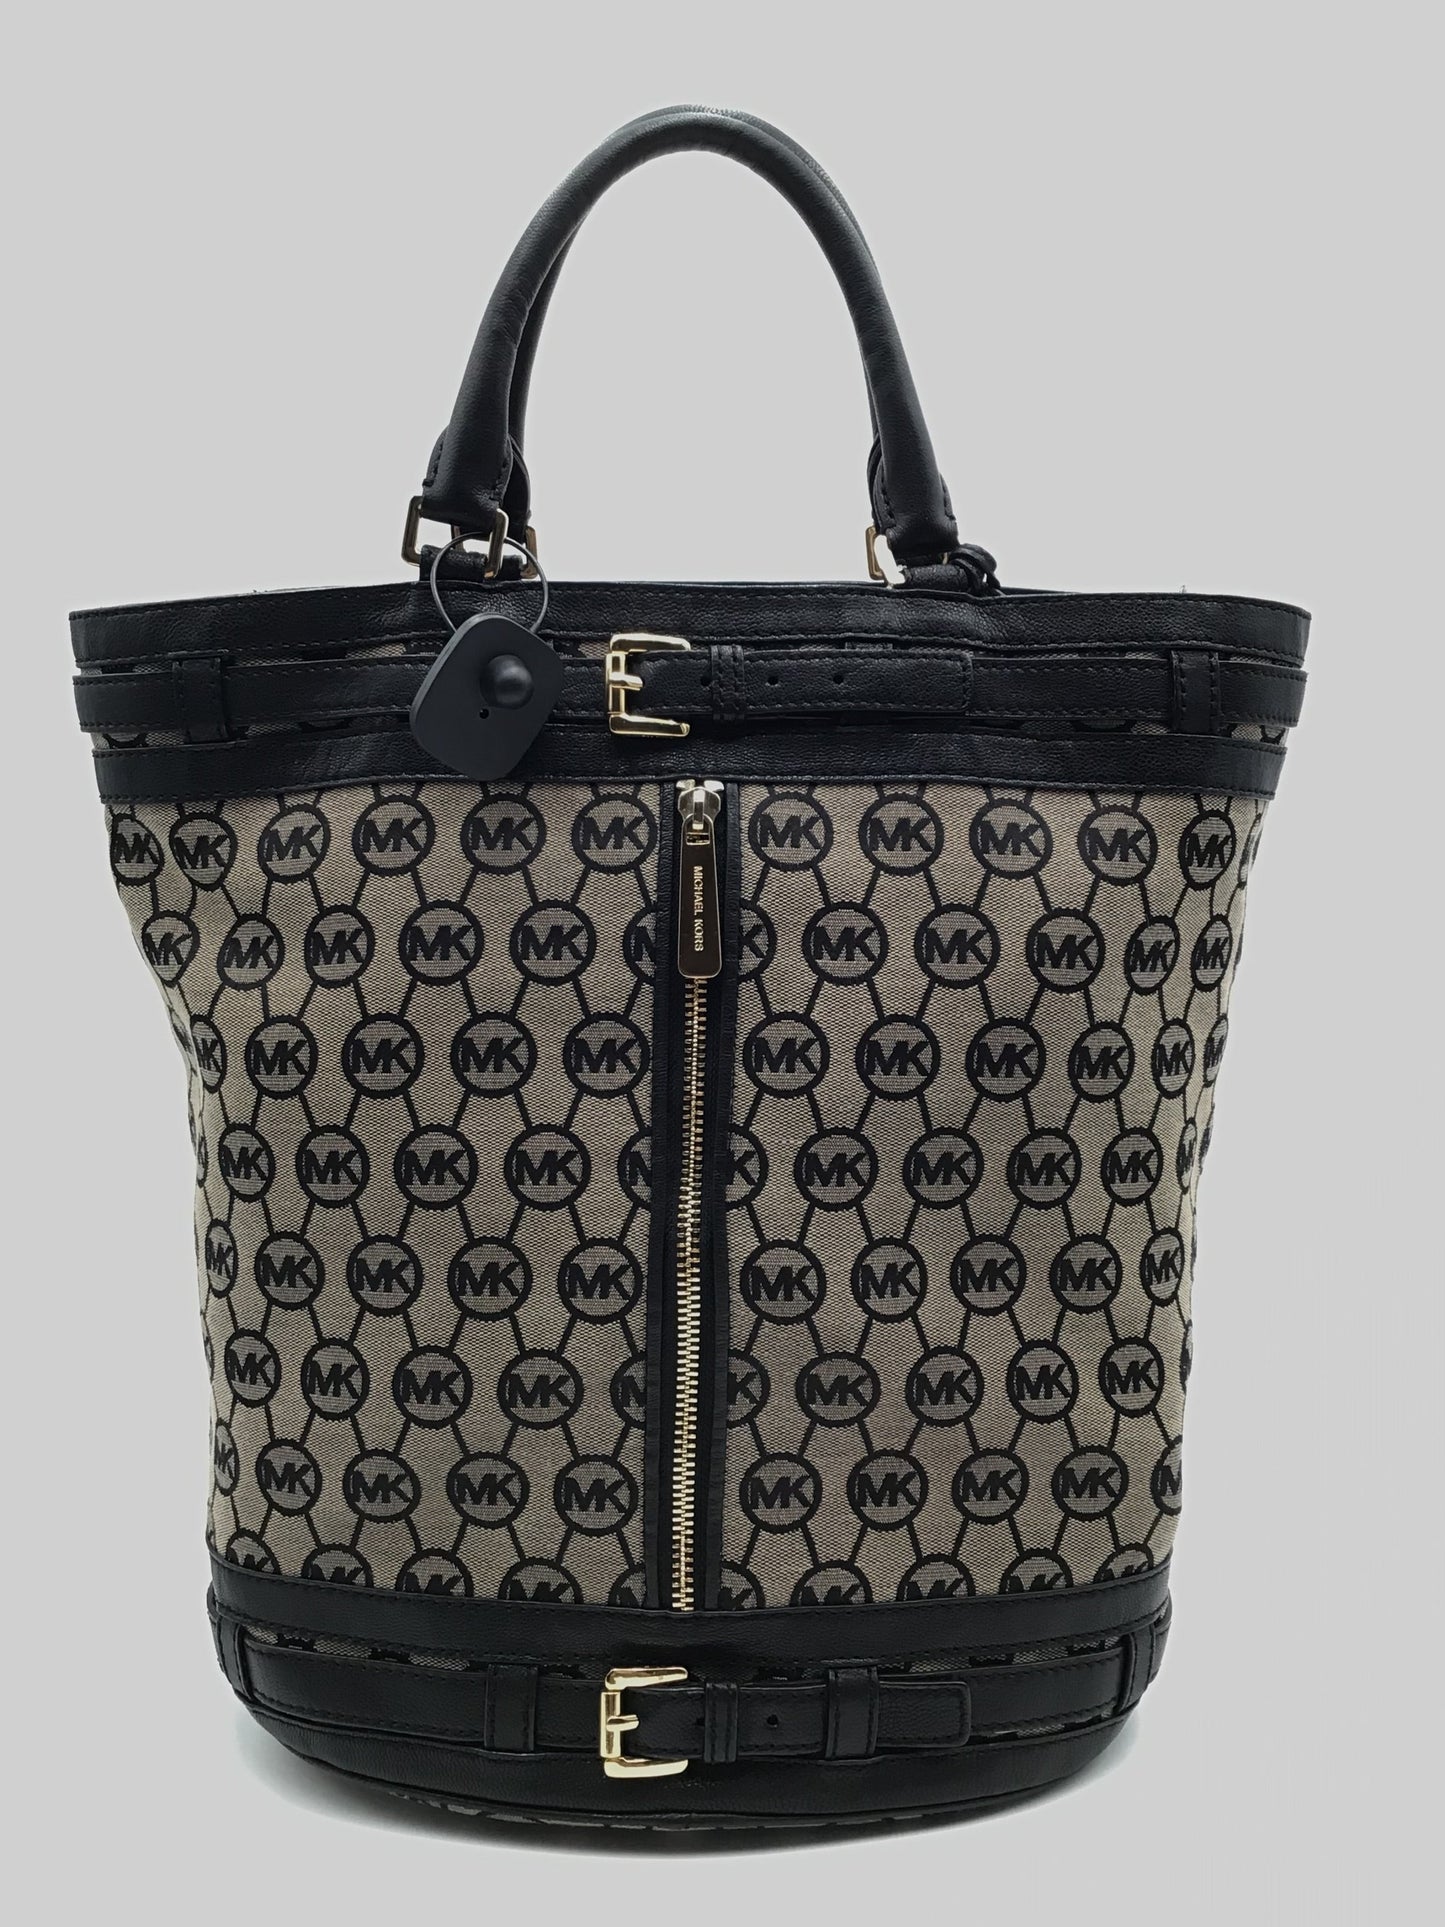 Handbag Designer Michael By Michael Kors, Size Large